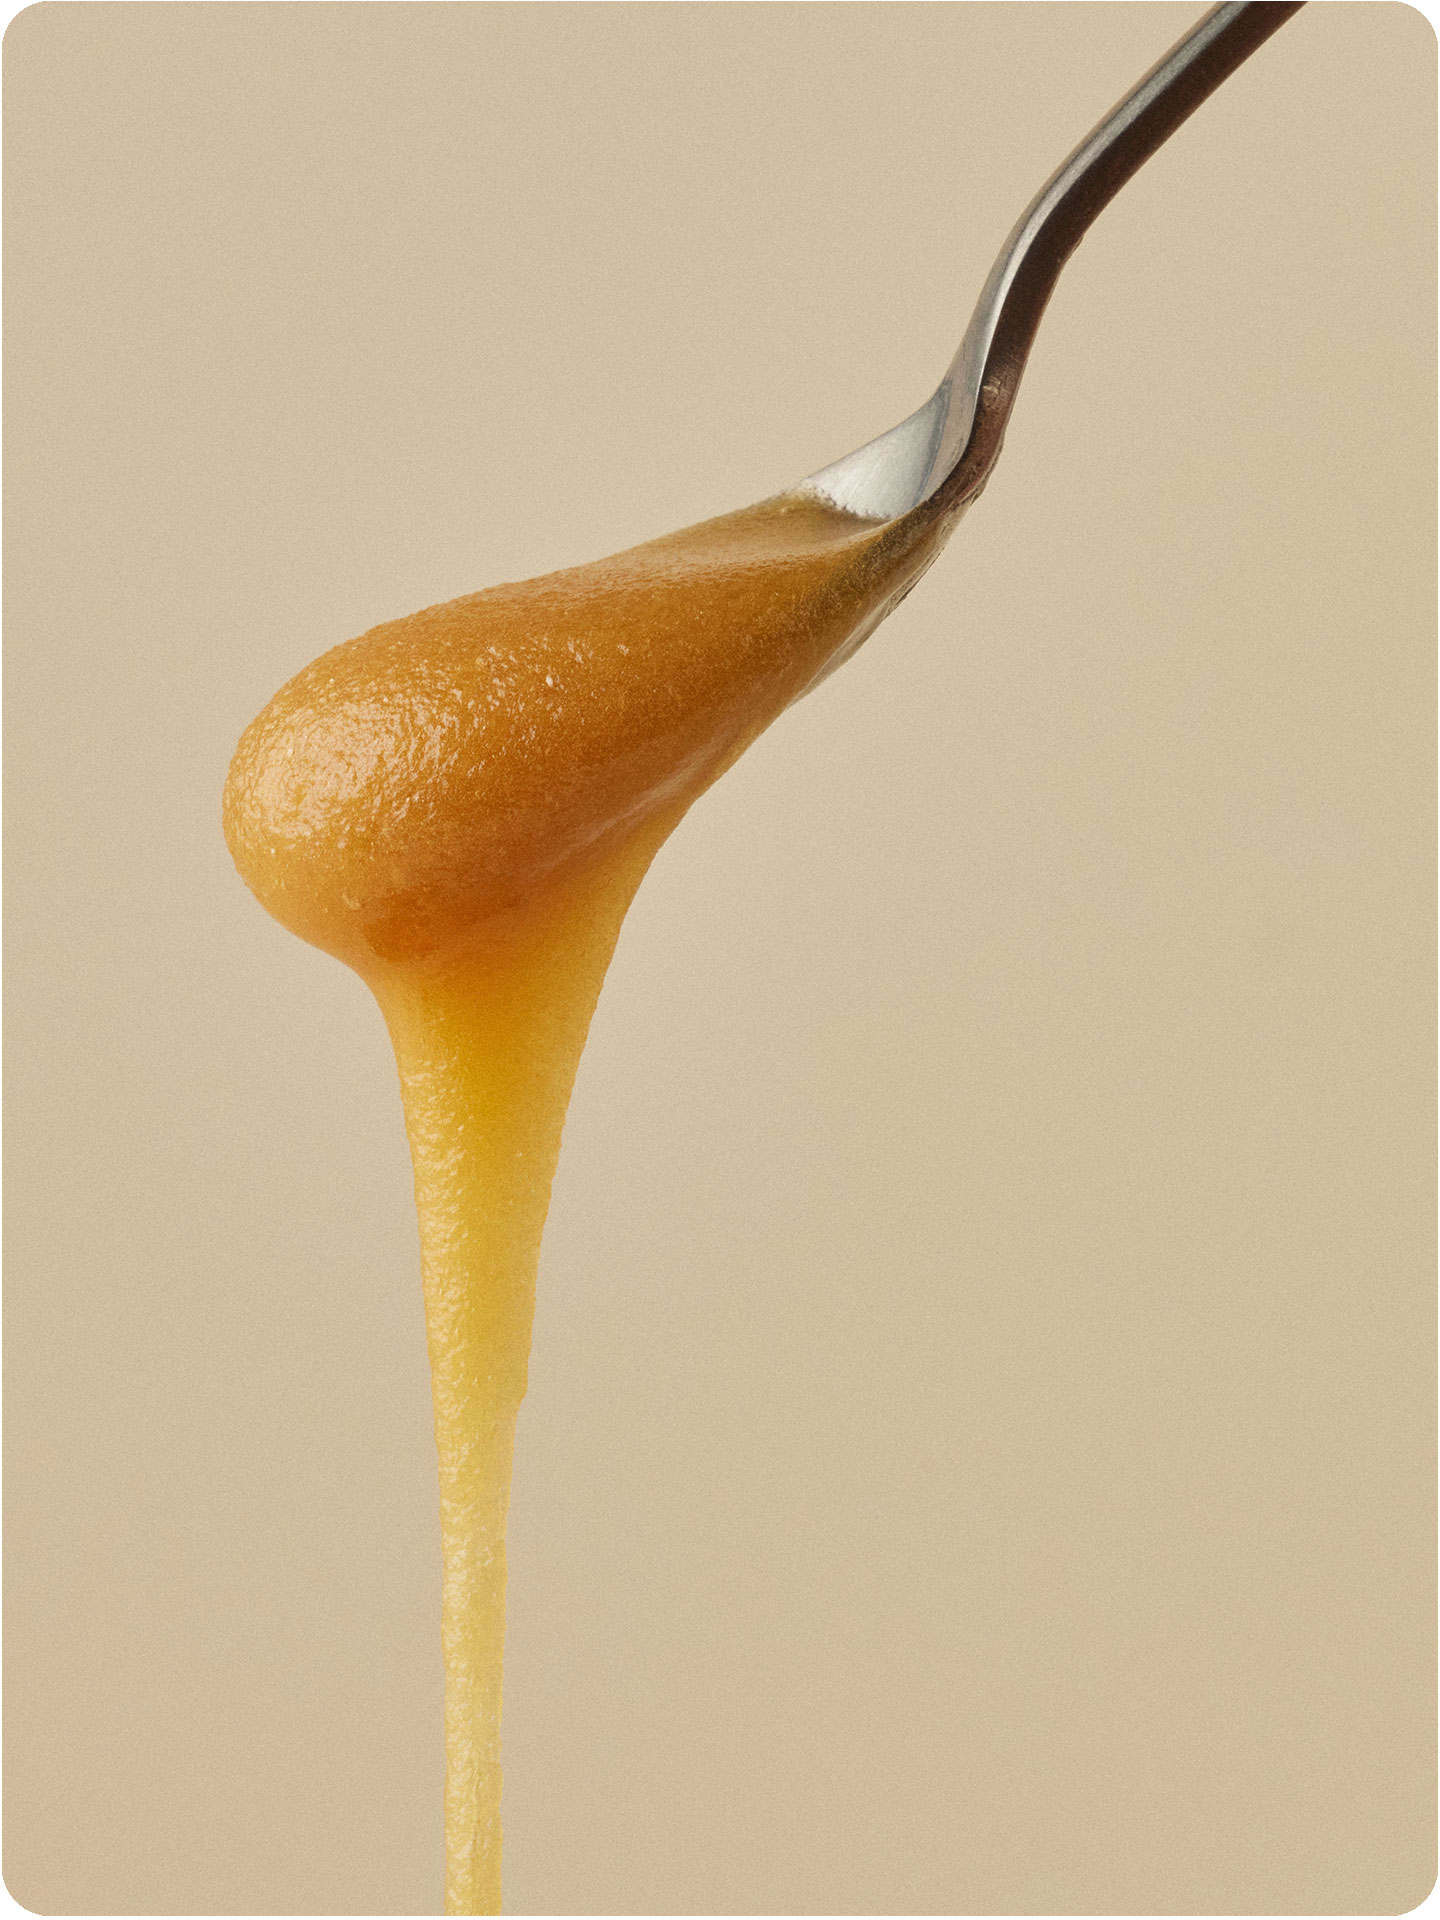 UMF™ 15+ Mānuka Honey